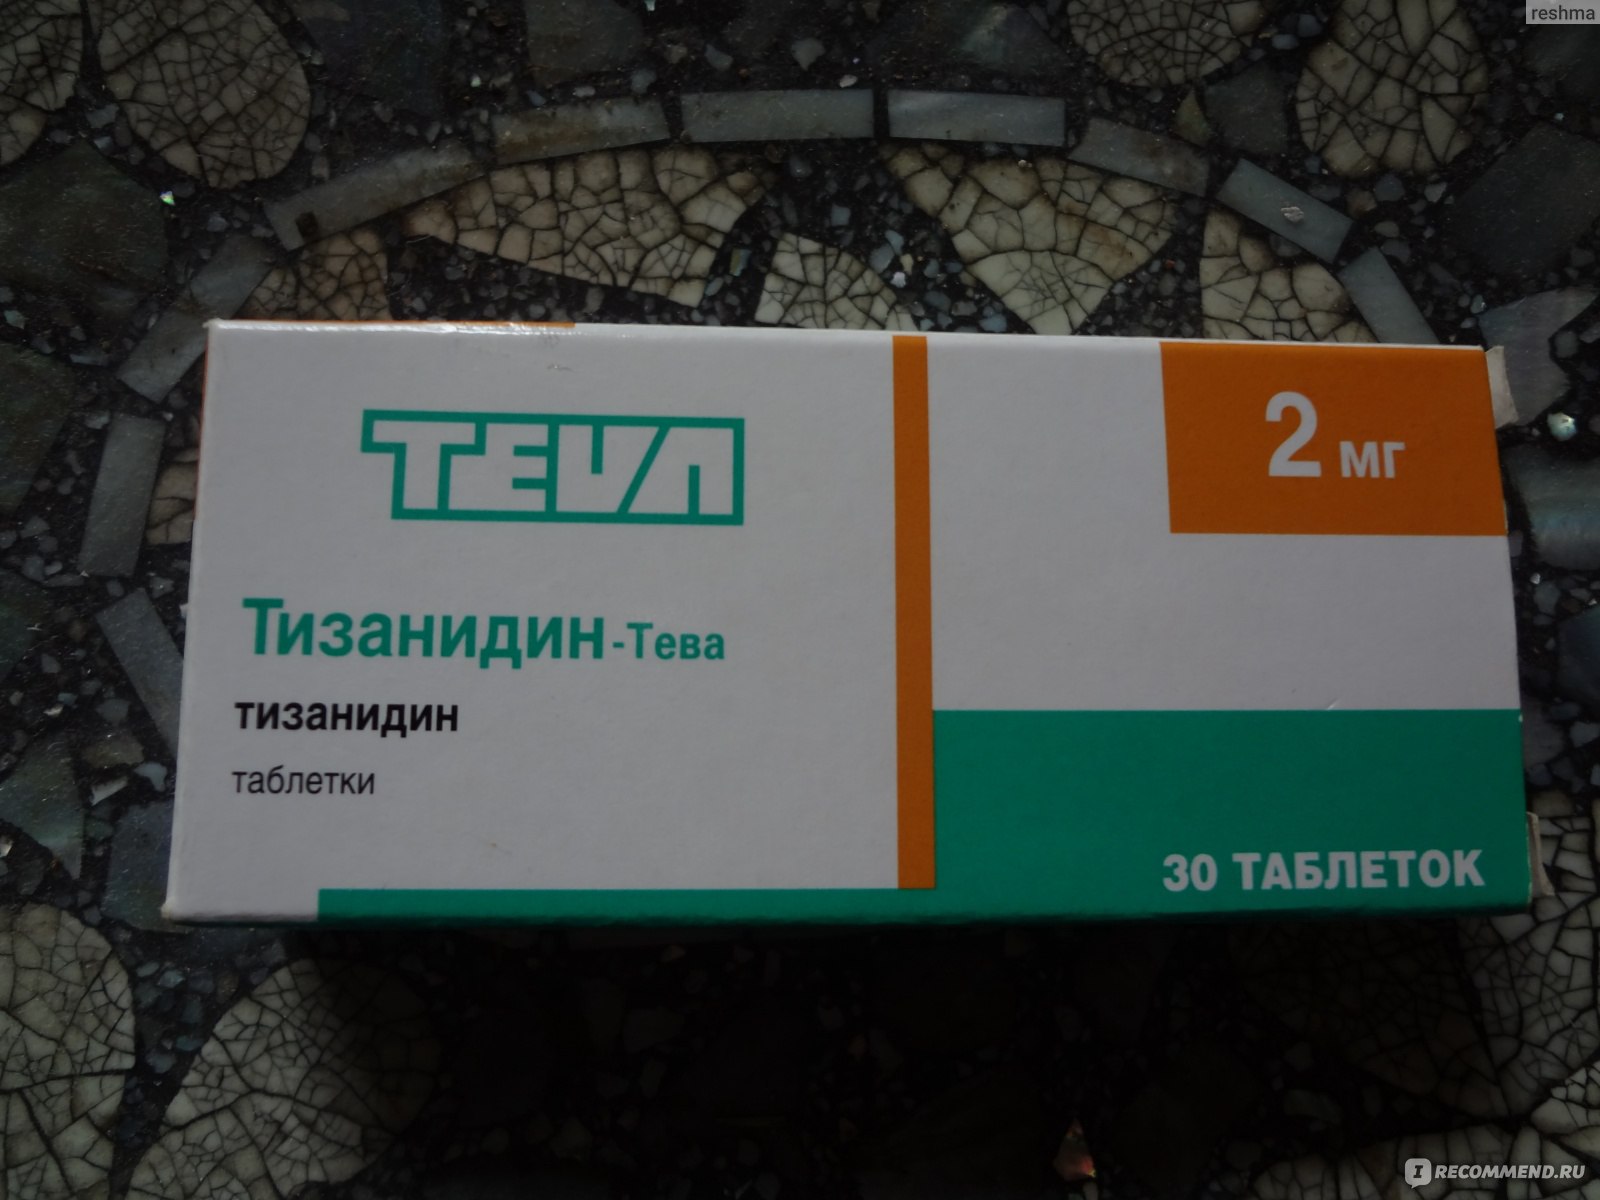 Лекарственный препарат TeVa Тизанидин Тева - «Препарат не так прост и .